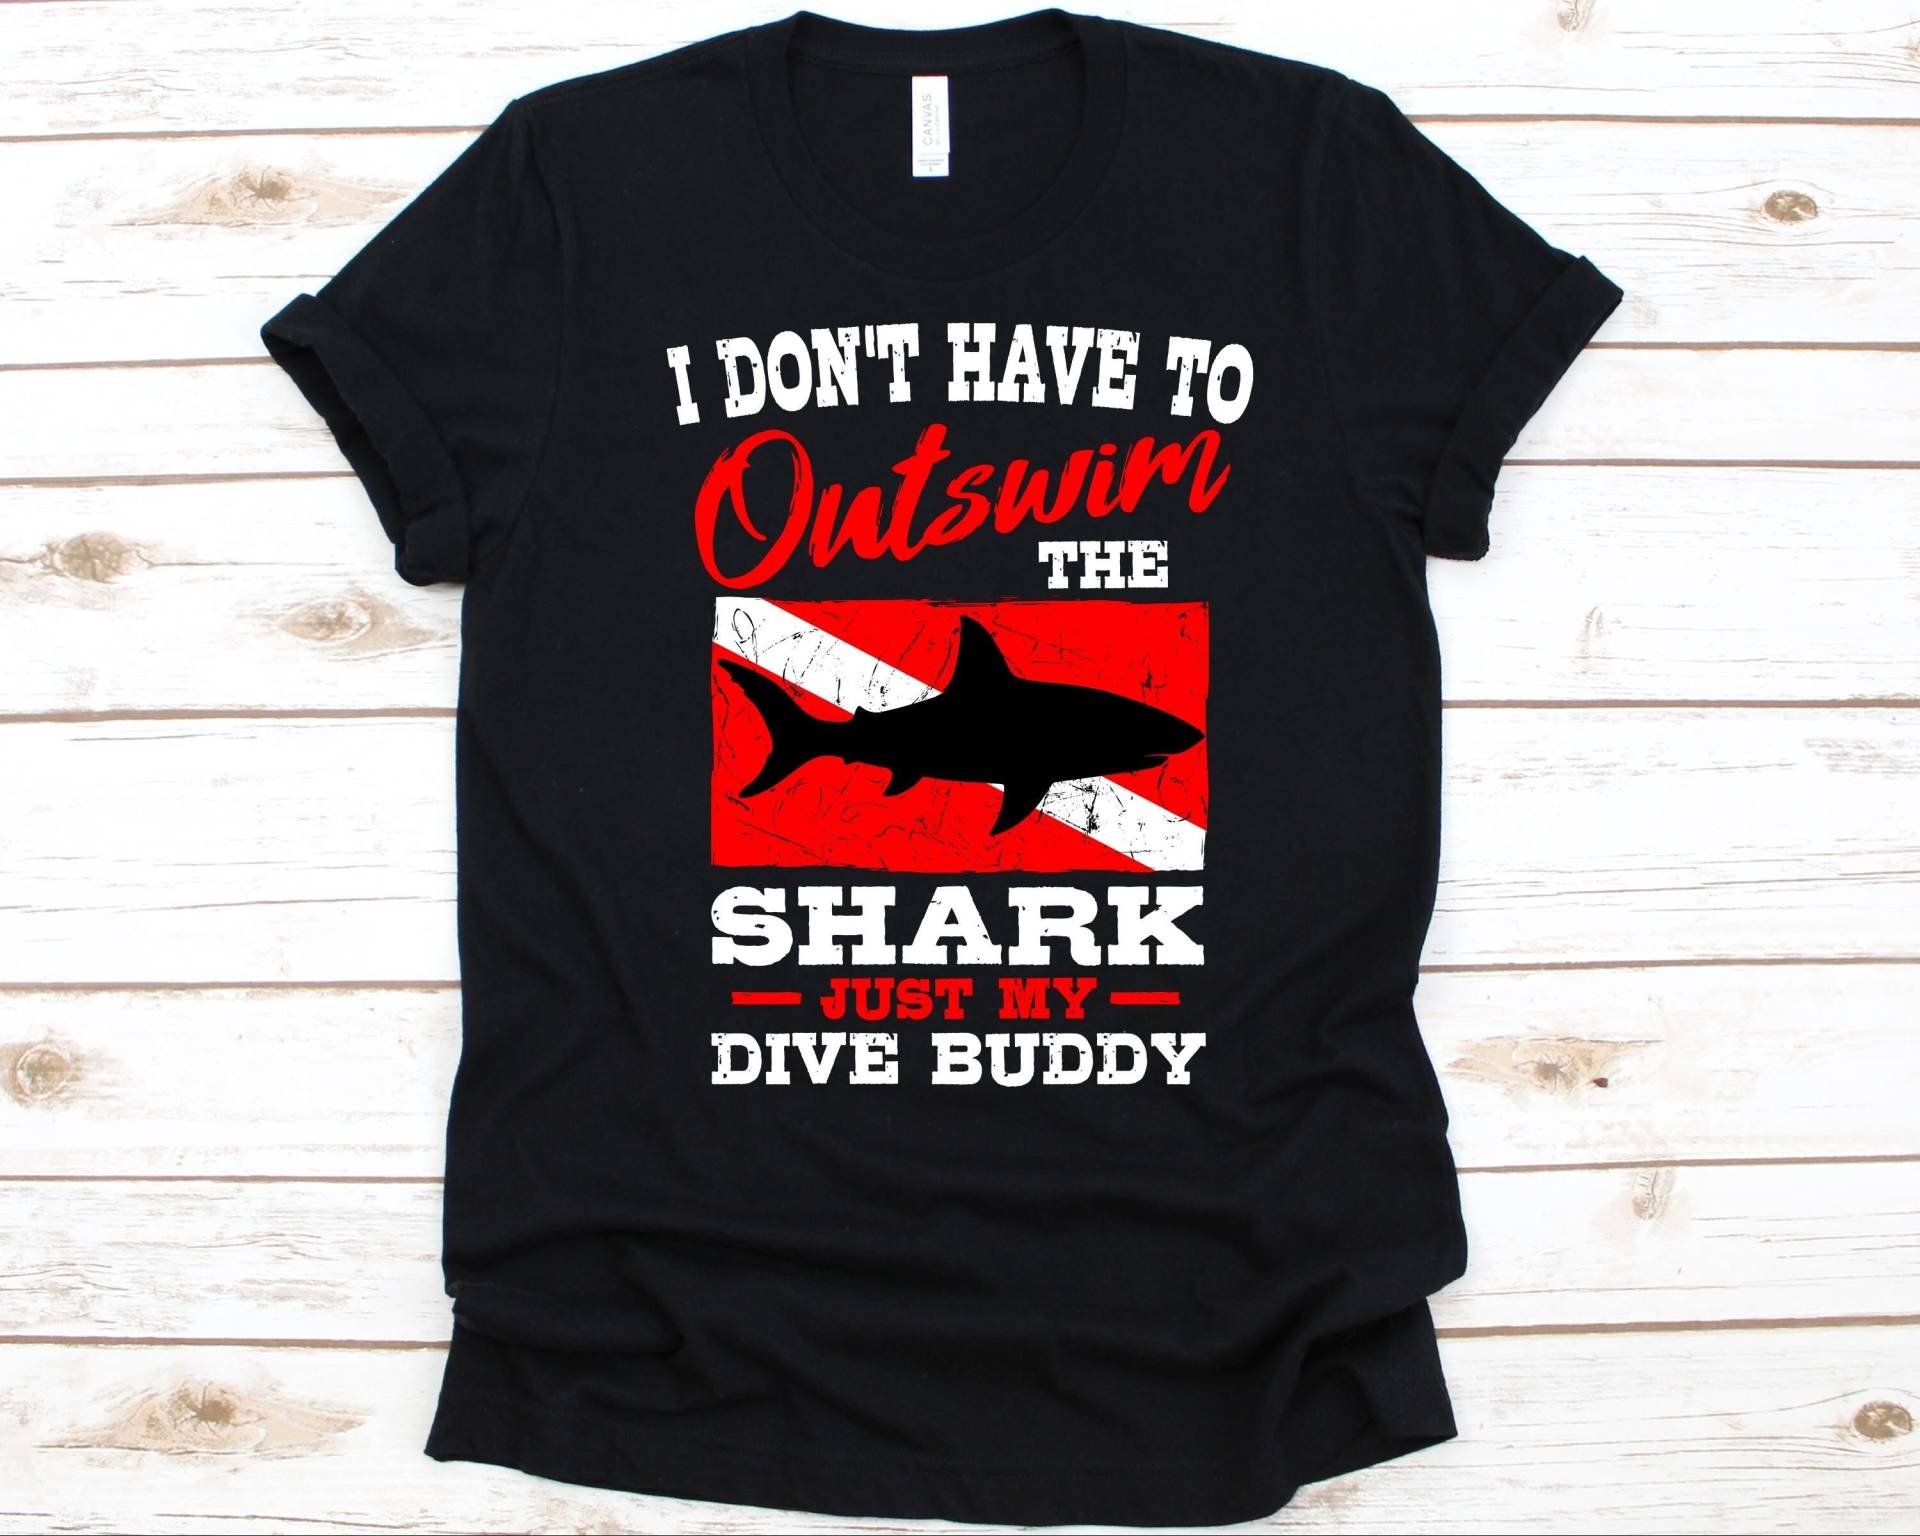 I Don't Have To Outswim The Shark Just My Dive Buddy Shirt, Diver Shirt Männer Und Frauen, Scuba Diving Divers von AbbysDesignFactory